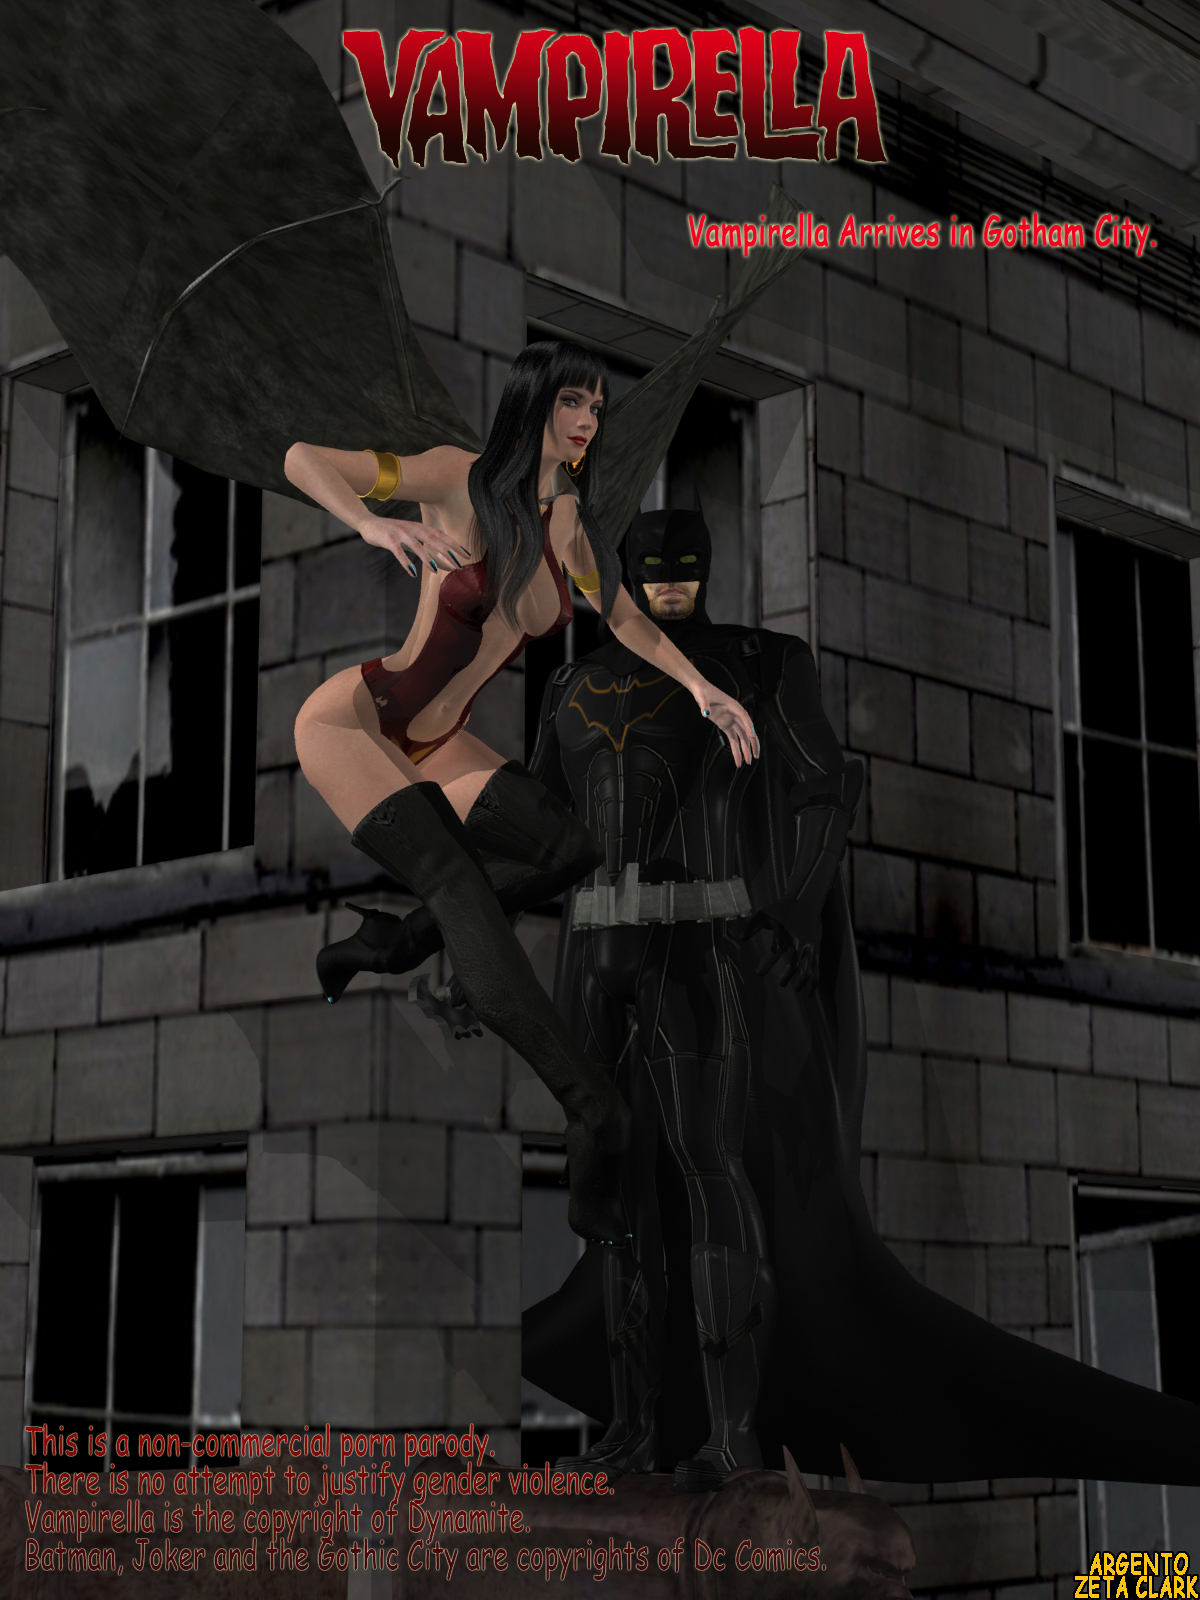 Vampirella Arrives in Gotham City from Argento